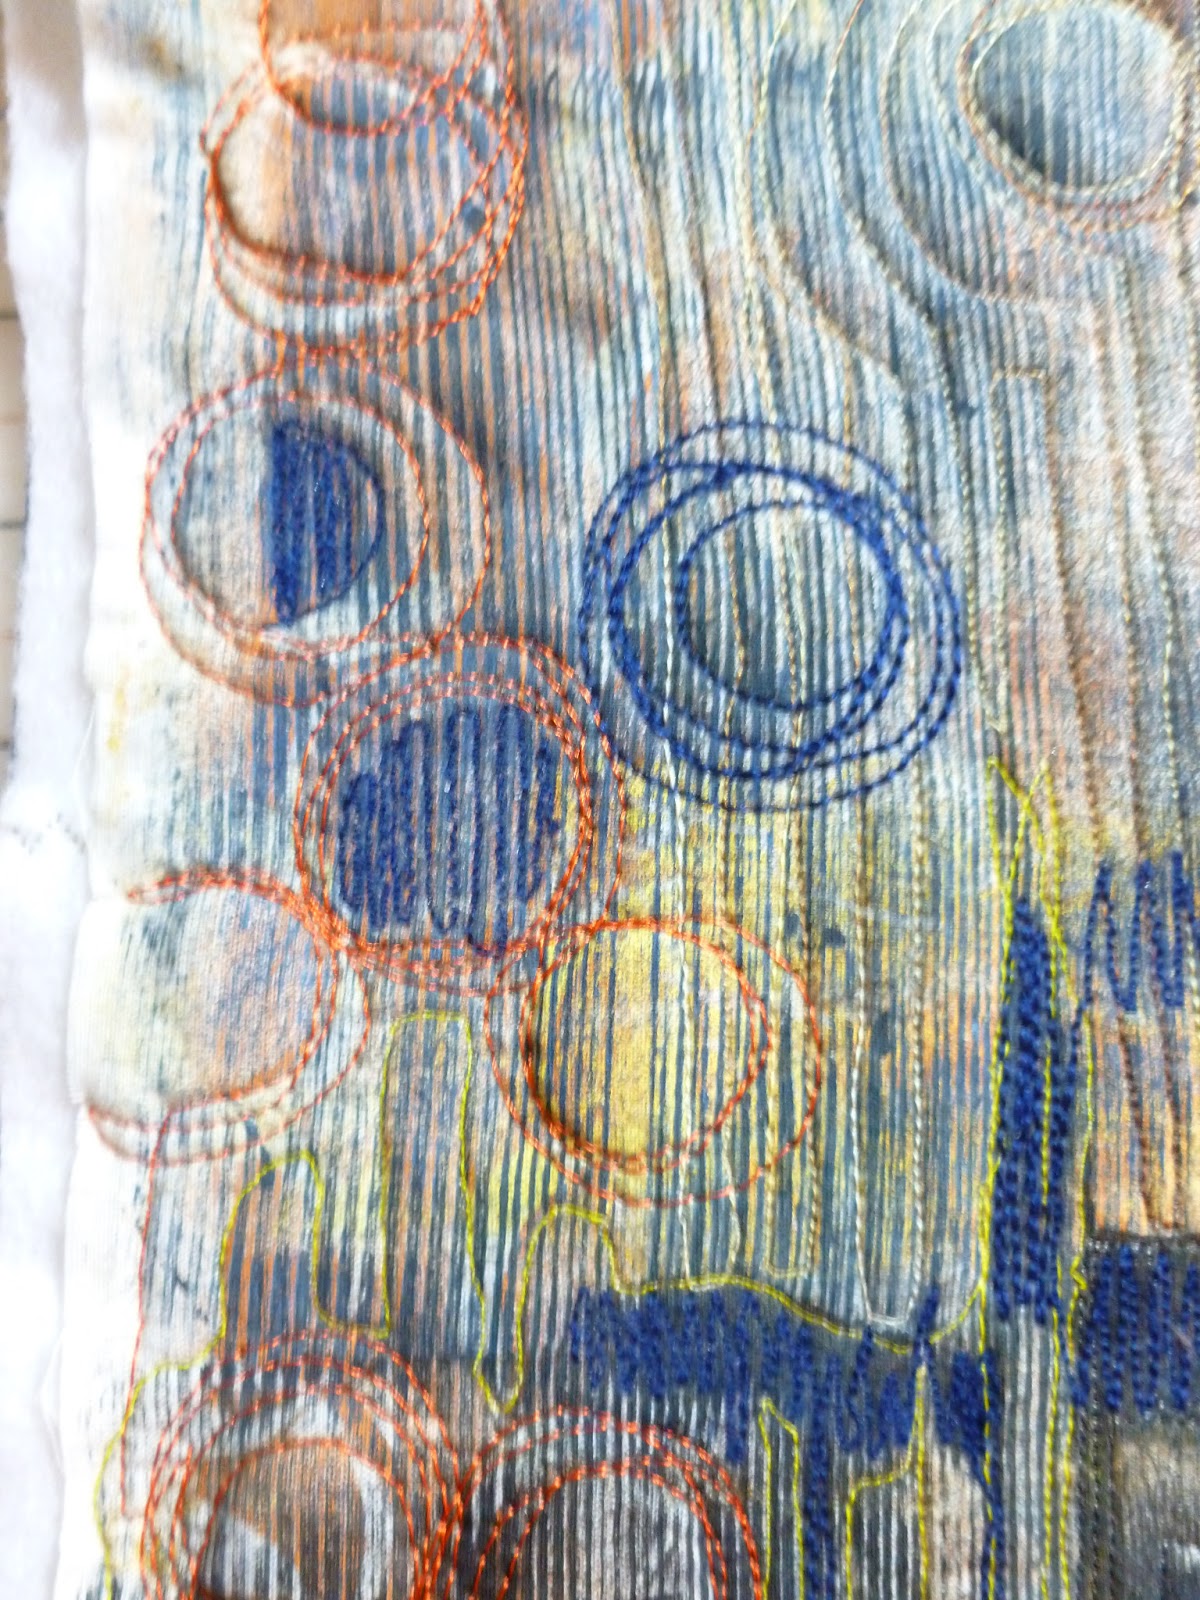 Gelli Plate and wood fabric stamps - Lynda Heines Fabric Design